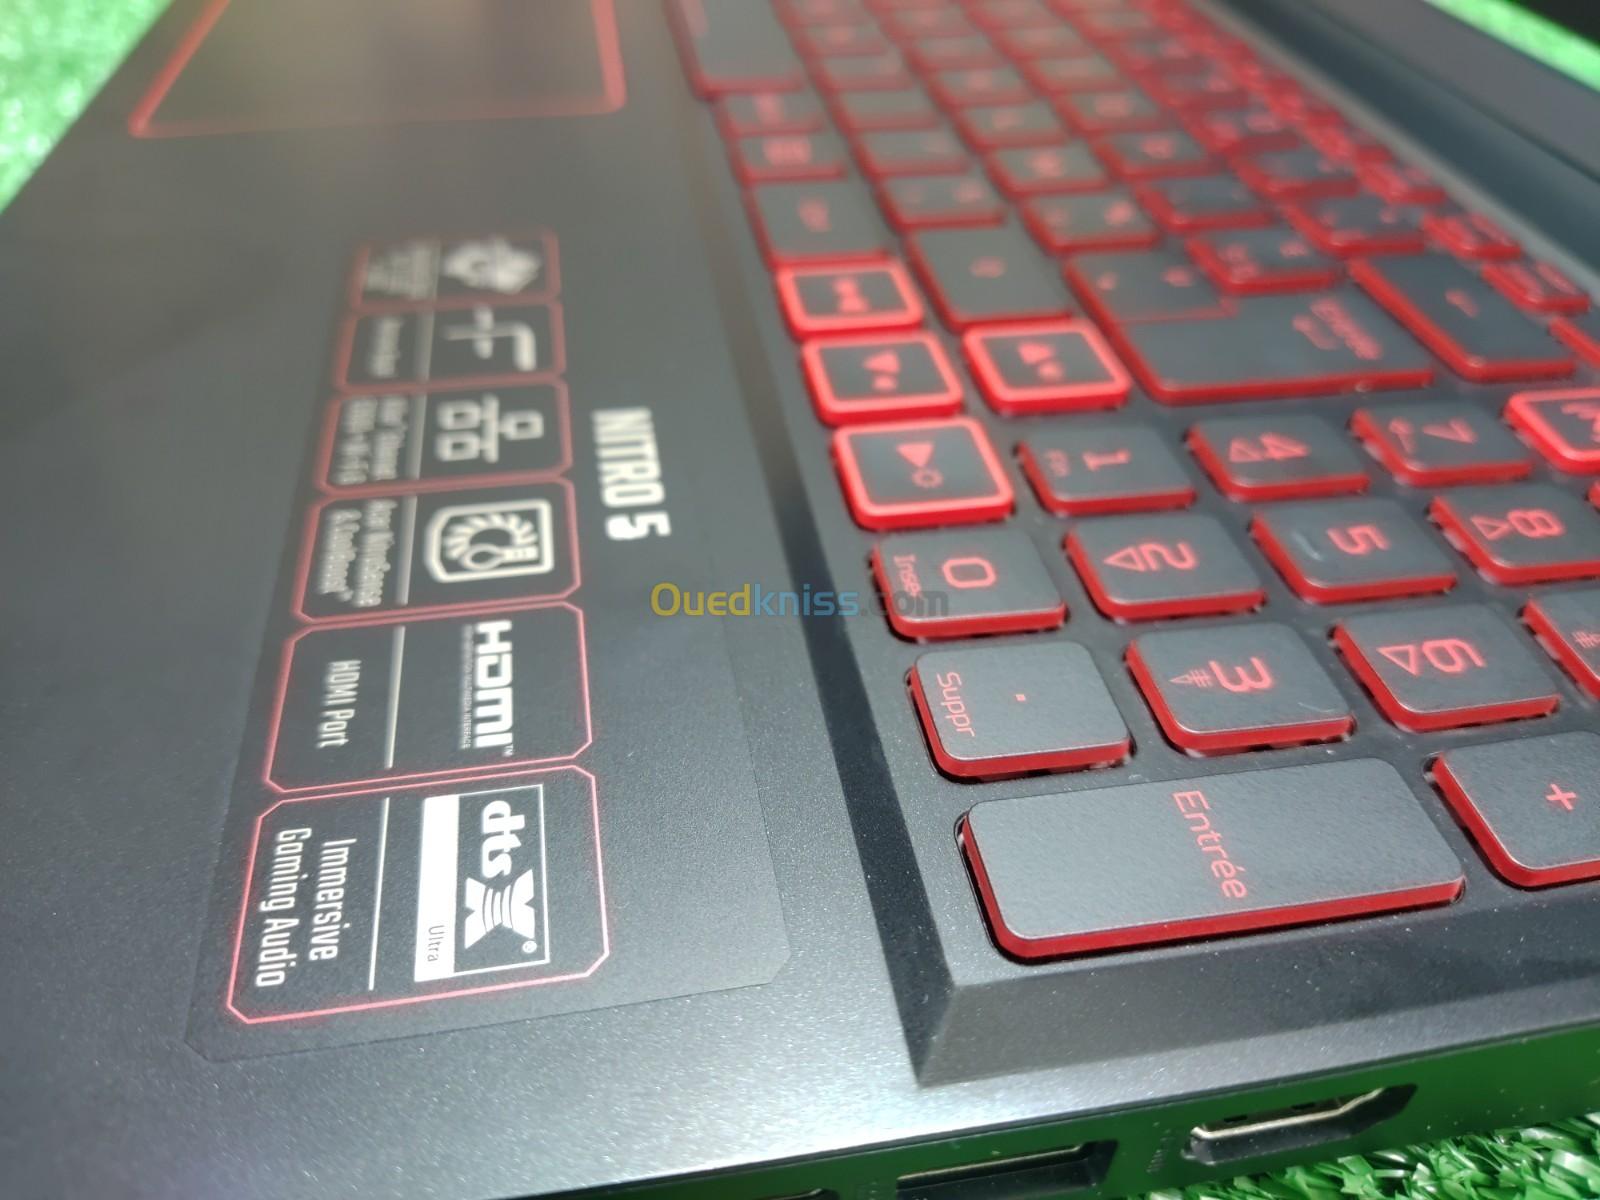 Acer NITRO 5 AMD ryzen 5 4600H 8Go DDR4 512Go SSD 15.6 FHD IPS SlimBezel NVIDIA GTX 1650 4Go